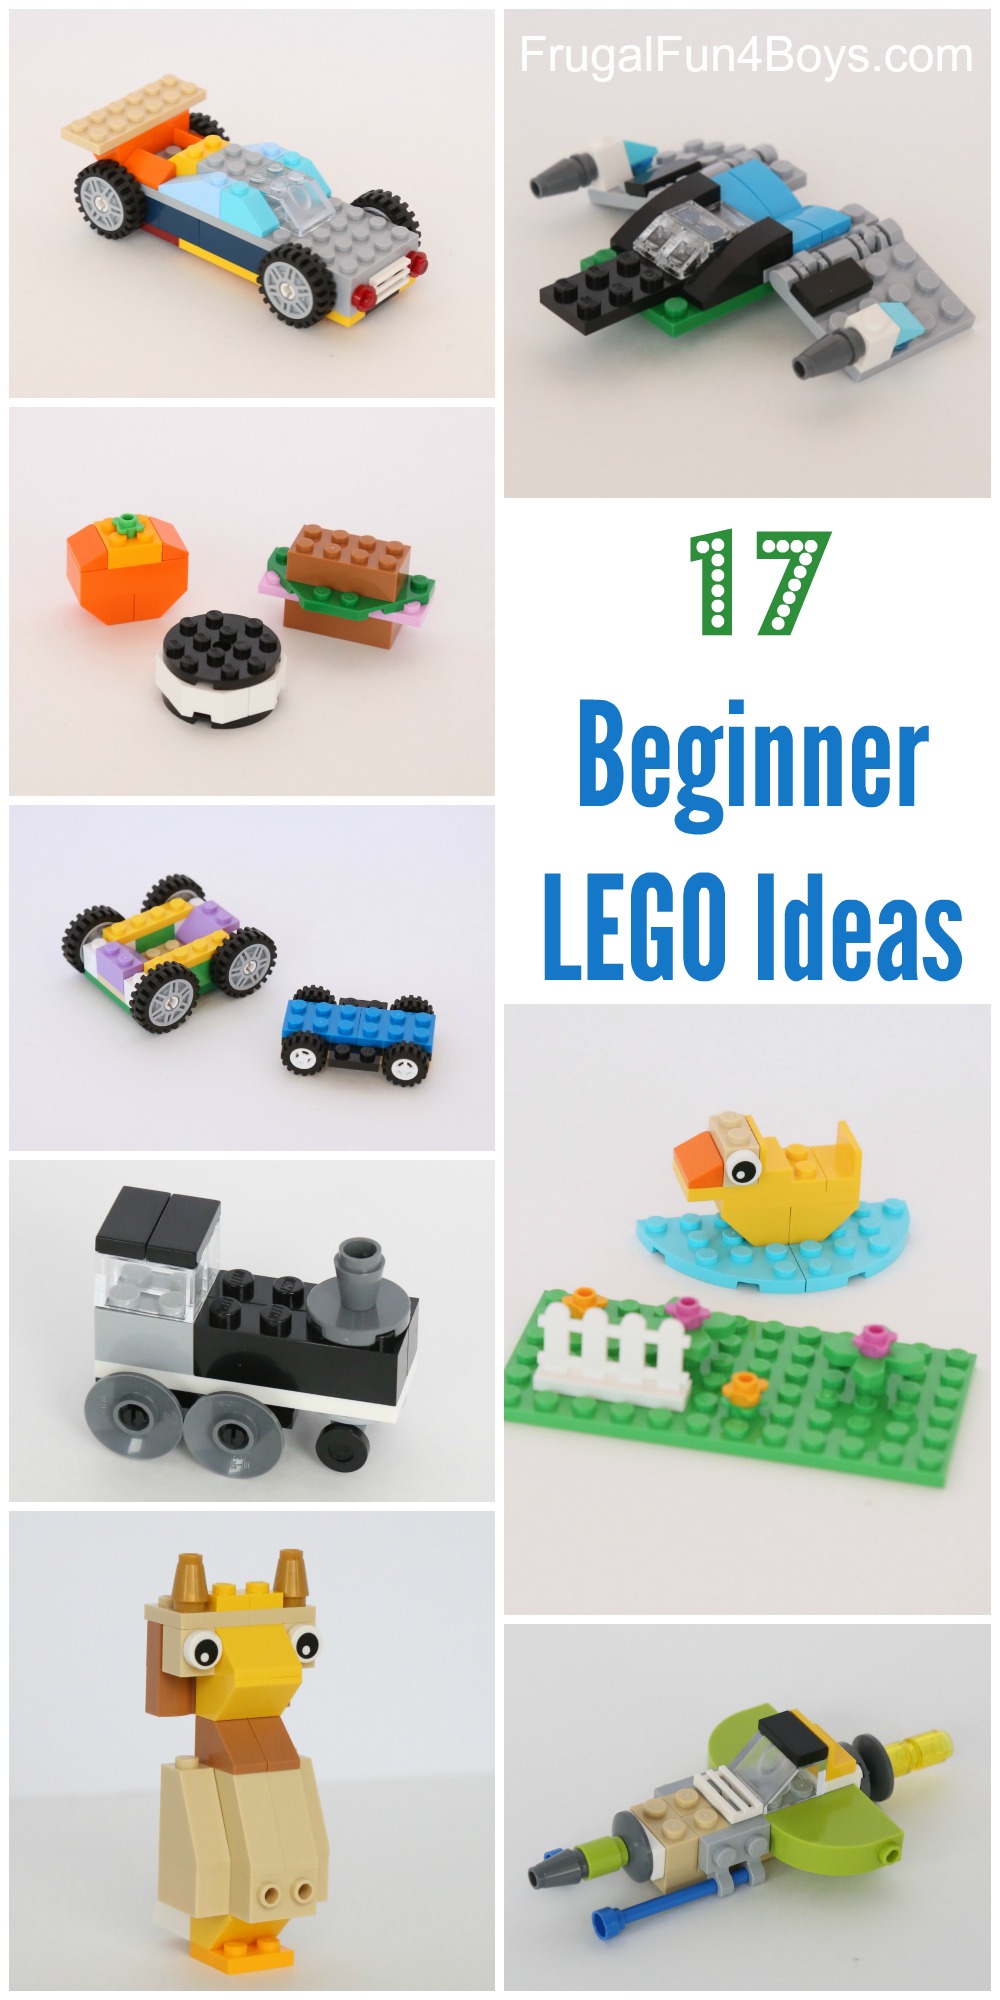 17 Beginner LEGO Ideas with LEGO Classic sets